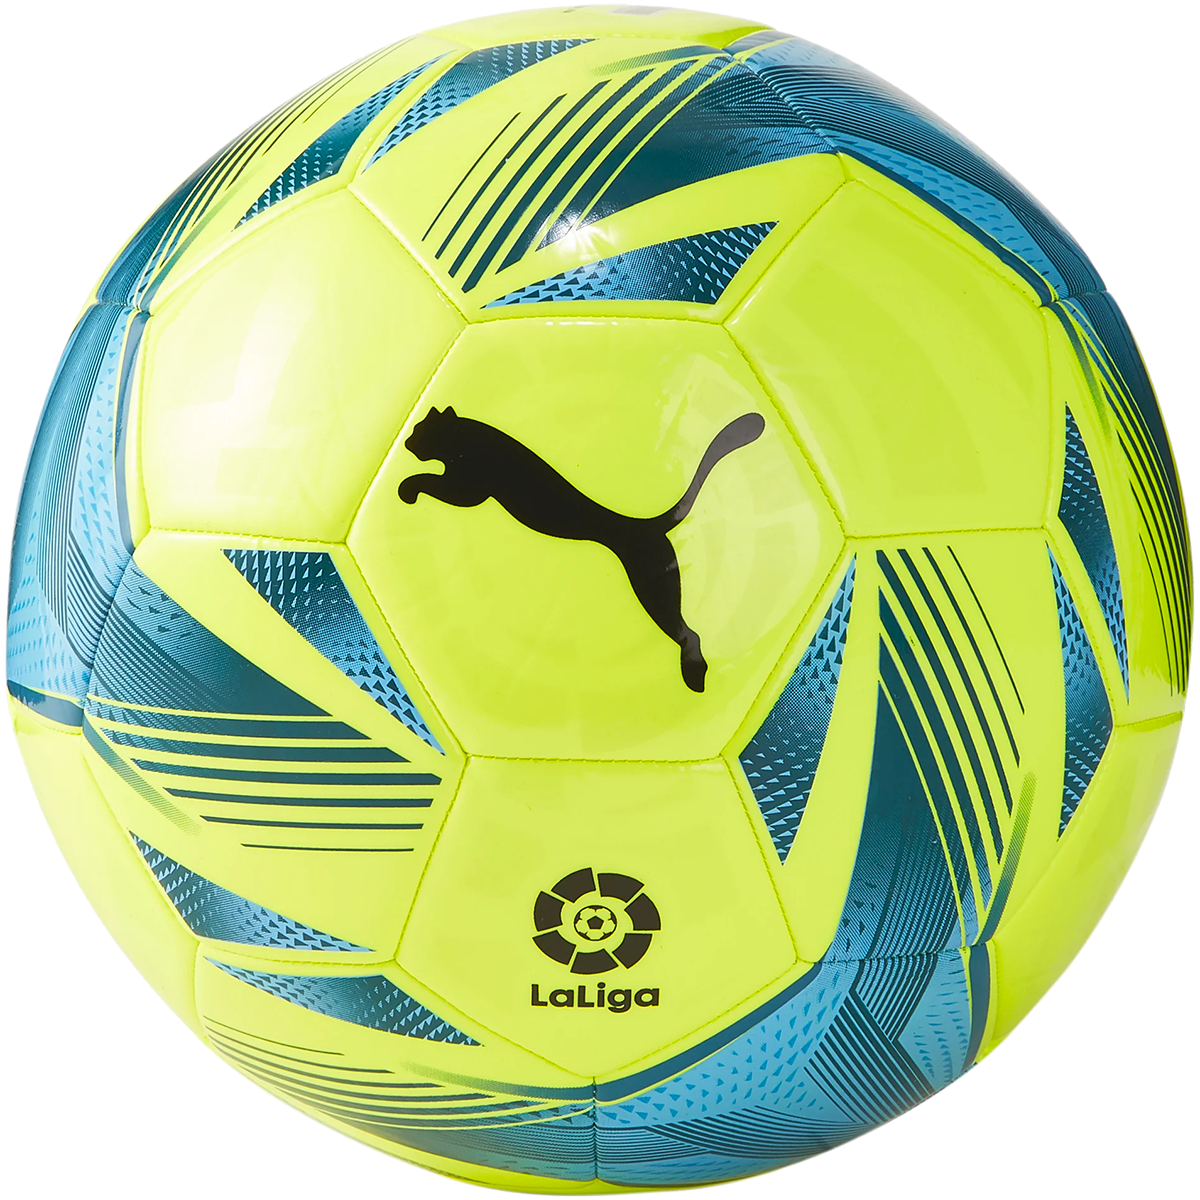 La Liga 1 Adrenalina MS Ball - Size 5 alternate view